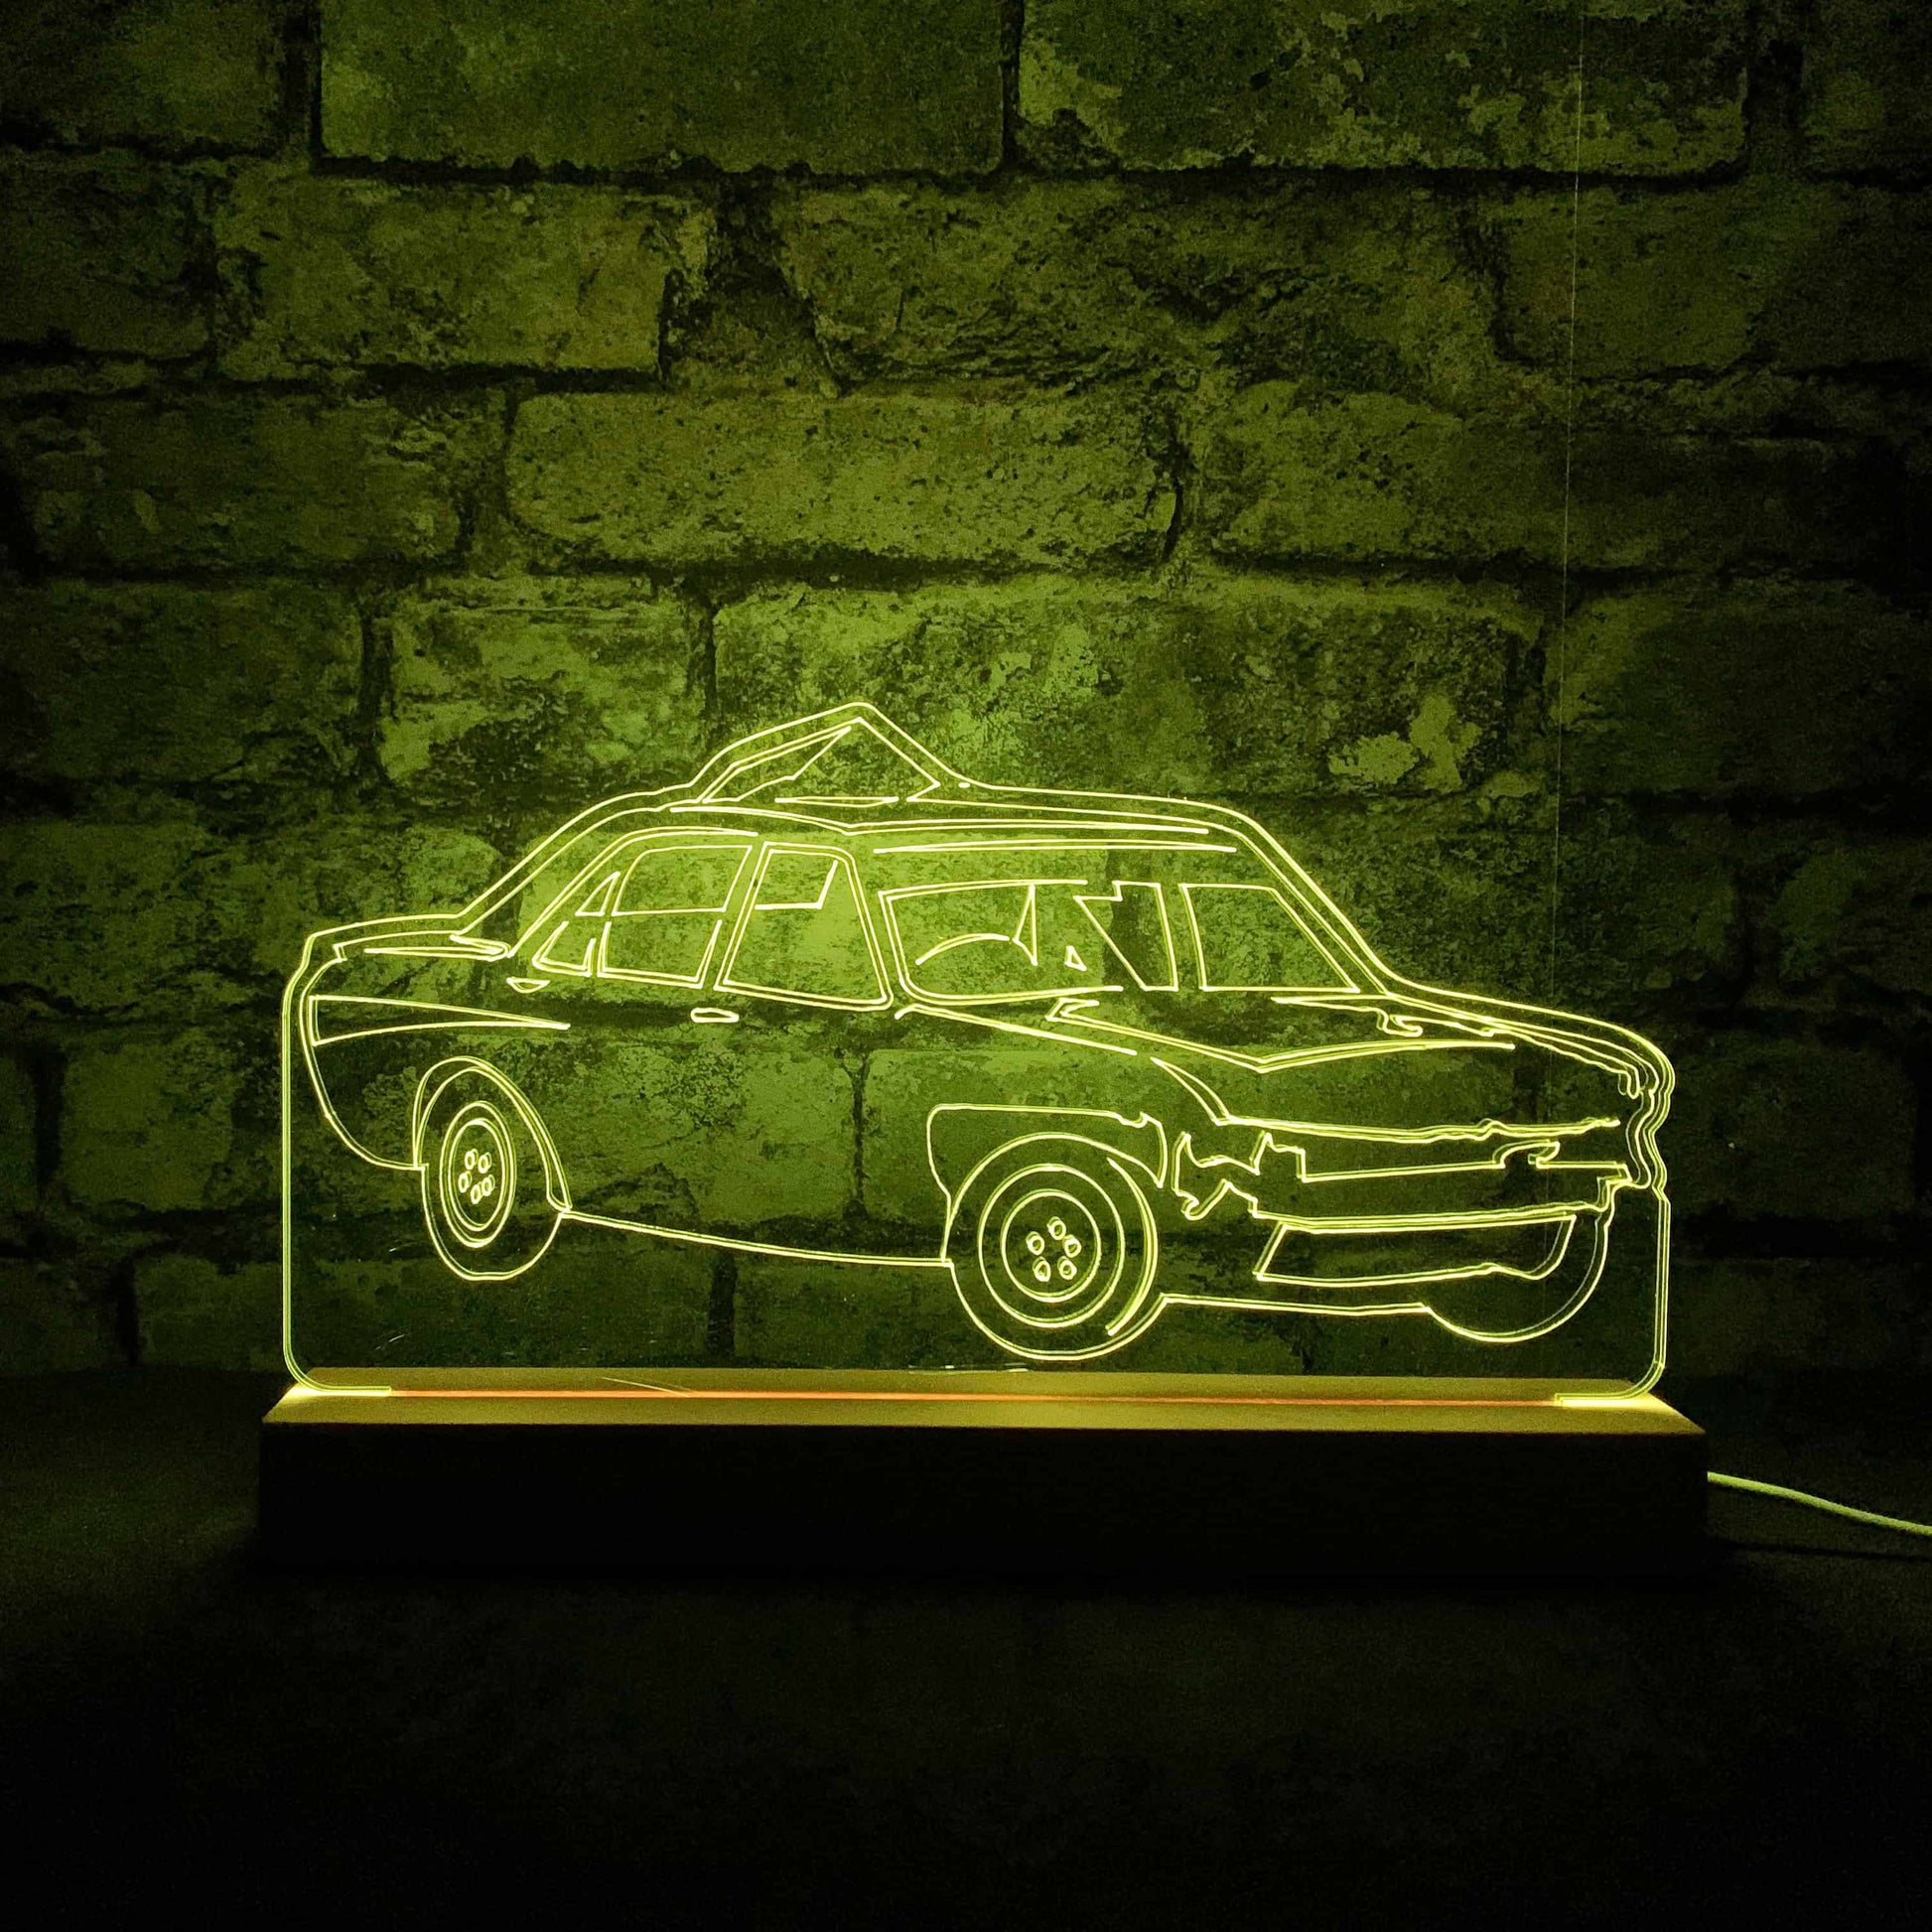 Granada Drift Banger Night Light - Large Wooden Base - Night Lights & Ambient Lighting - Stock Car & Banger Toy Tracks